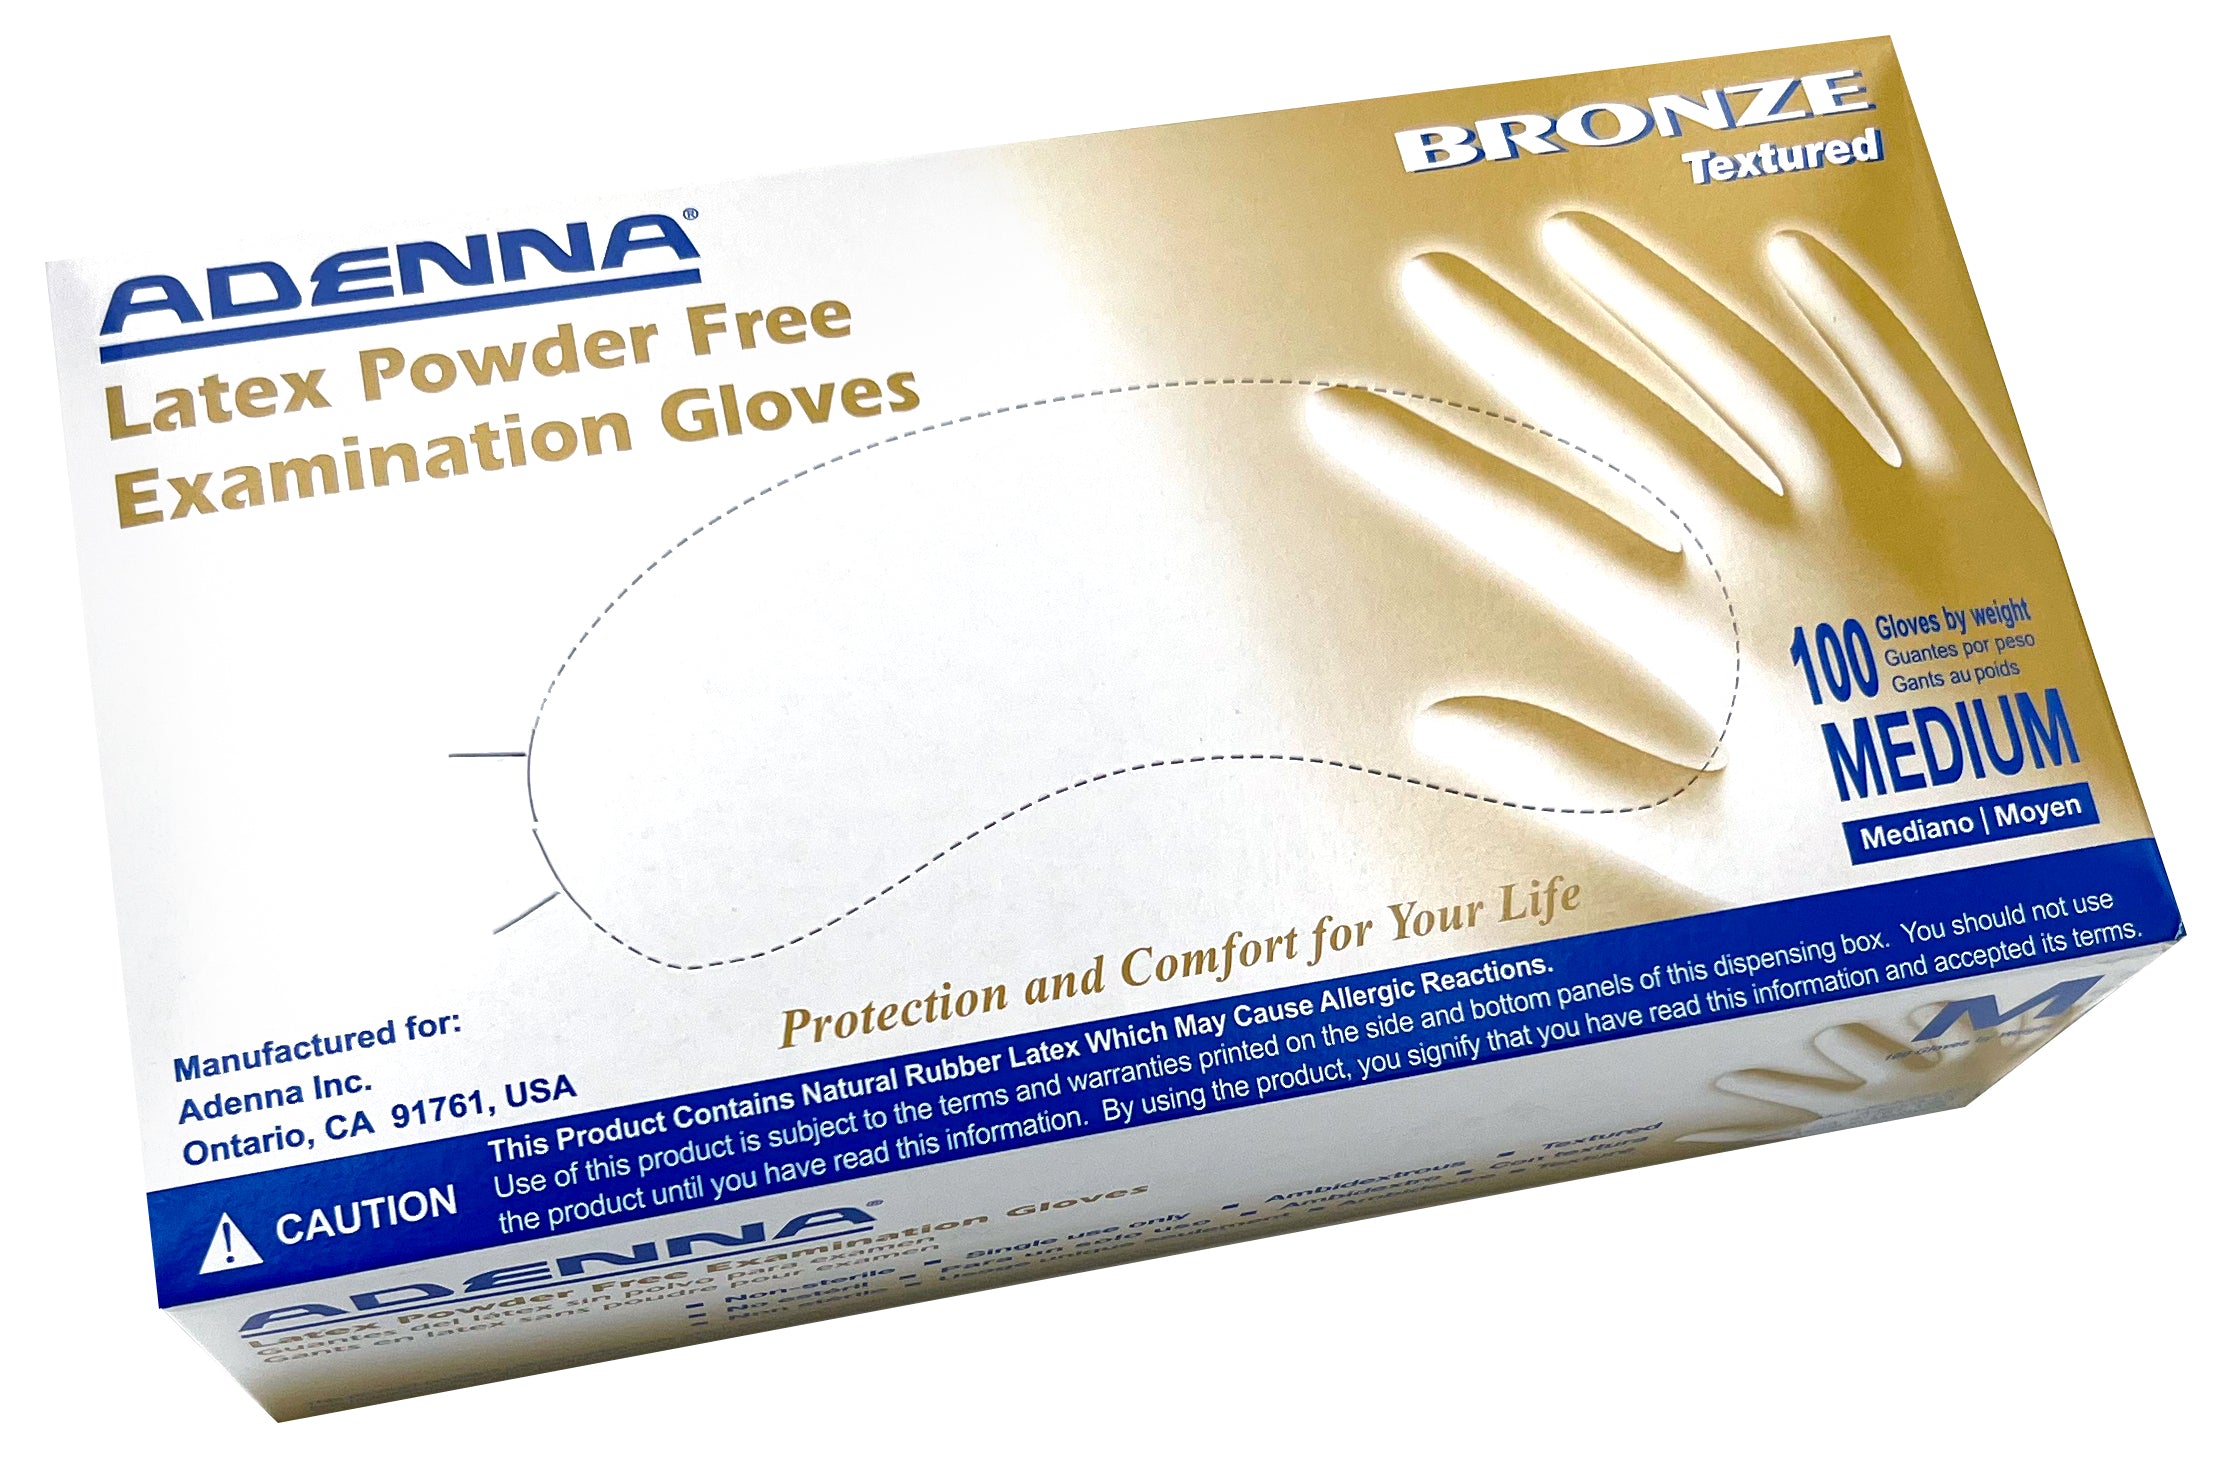 Adenna Latex Powder Free Examination Gloves